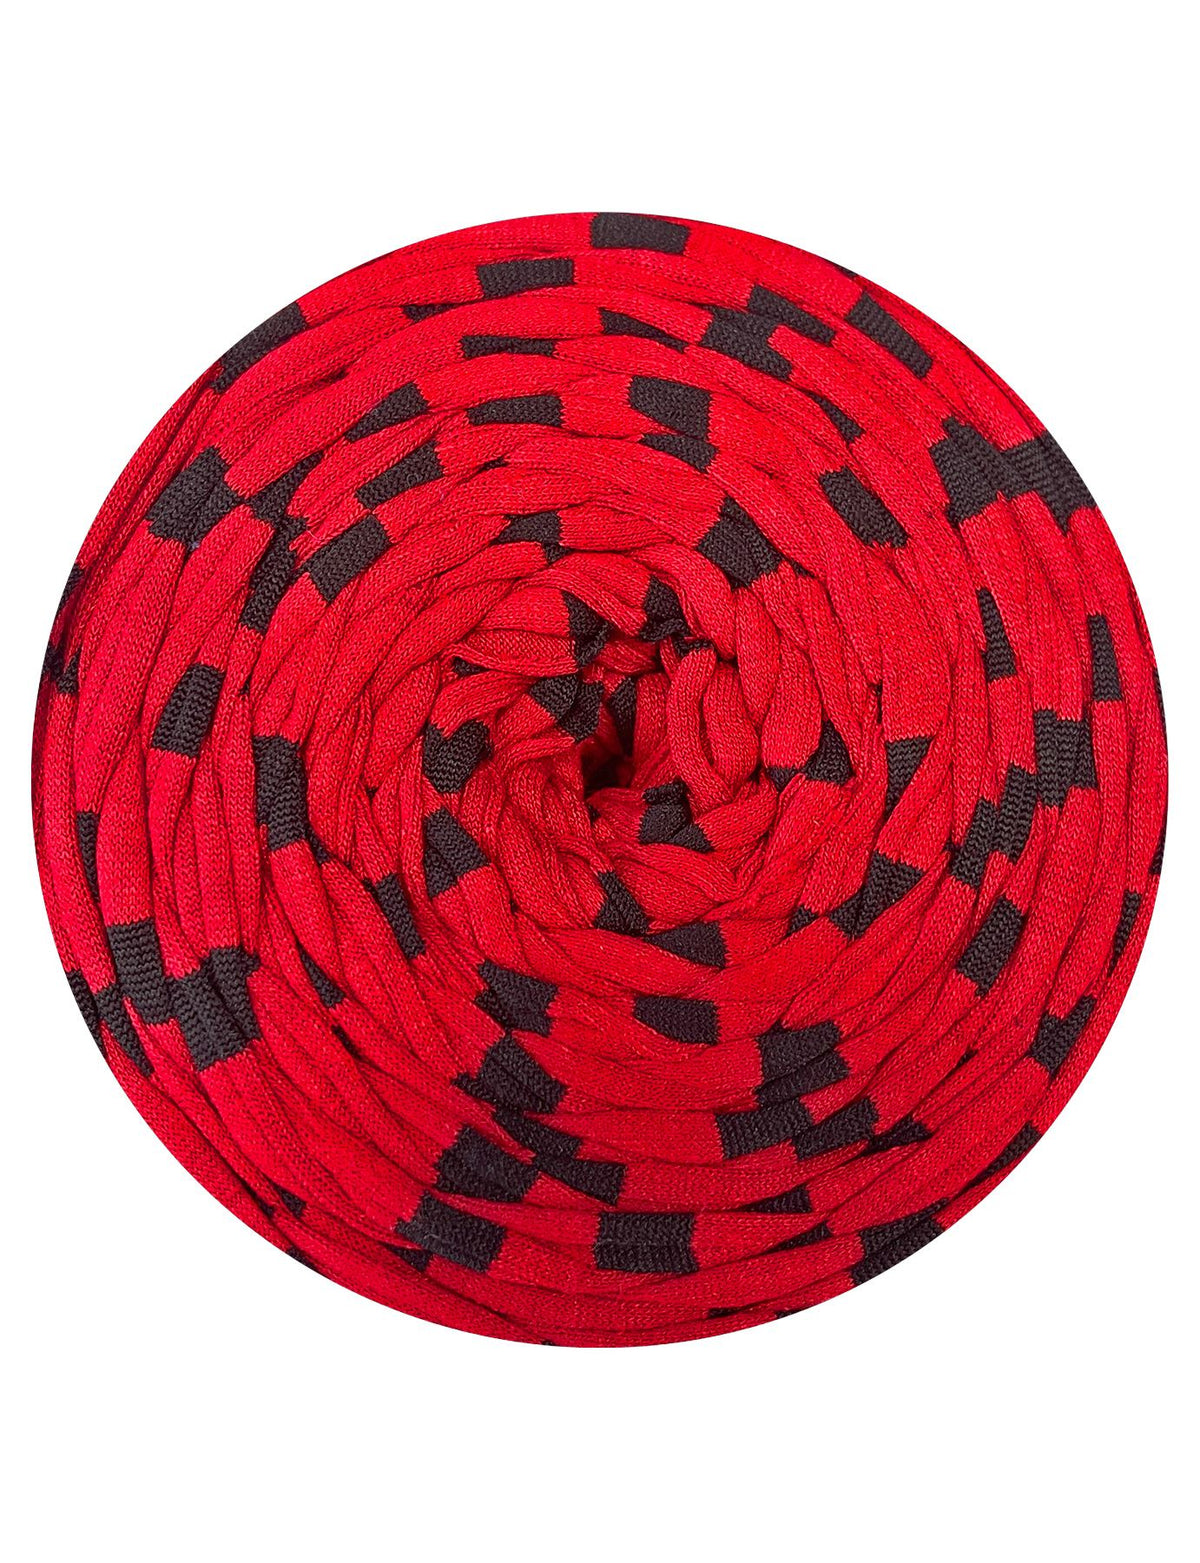 Red with black stripes t-shirt yarn by Rescue Yarn (100-120m)